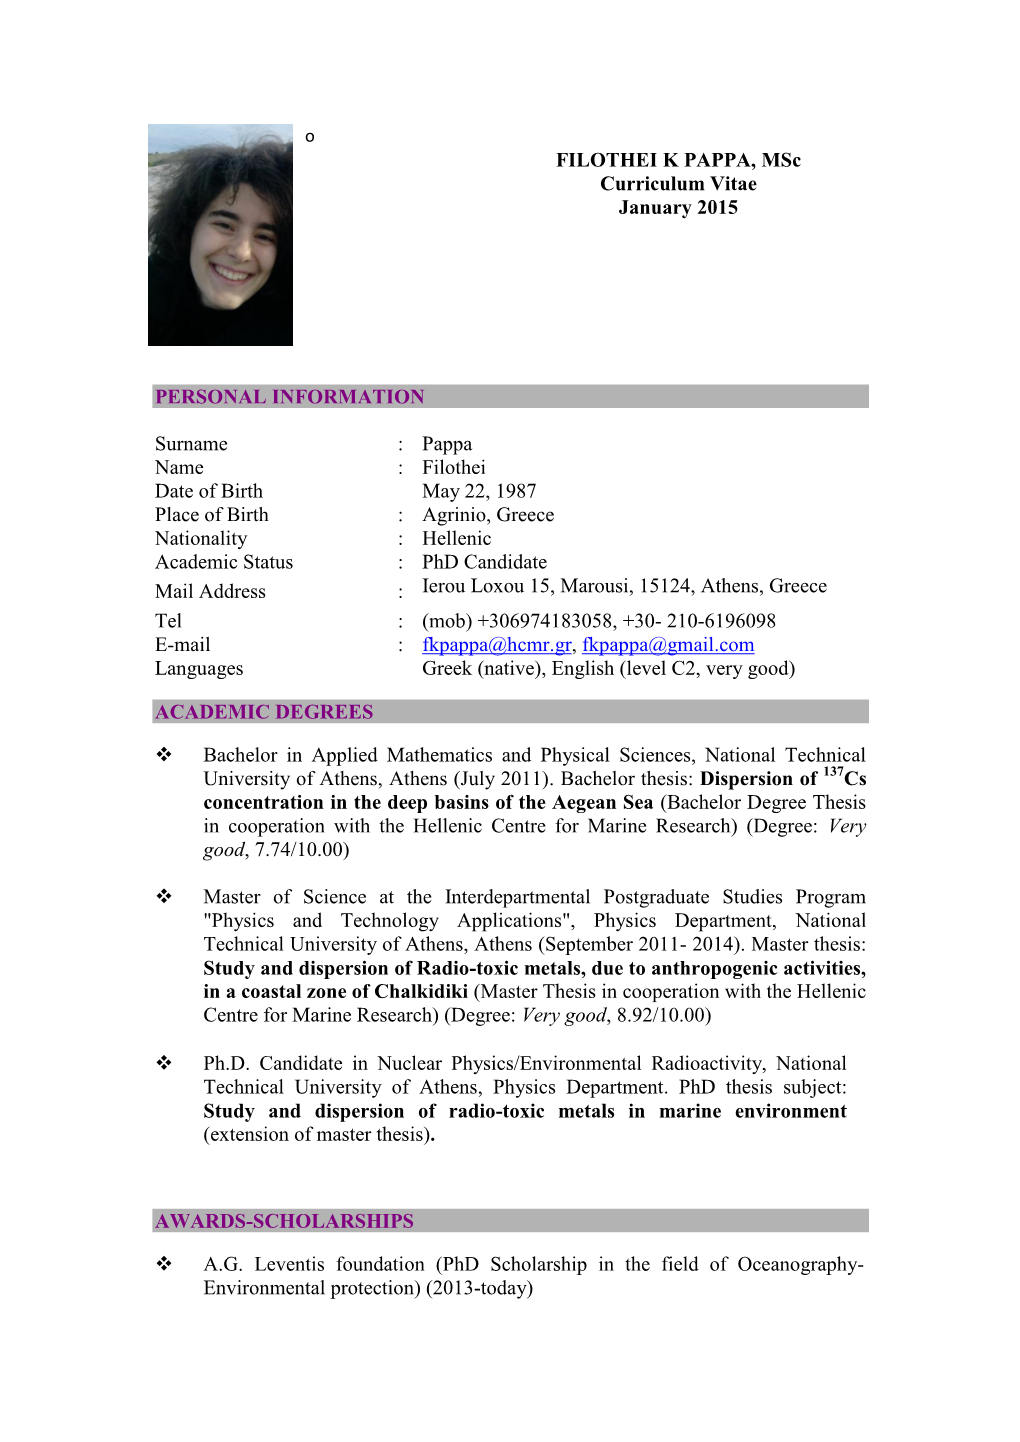 FILOTHEI K PAPPA, Msc Curriculum Vitae January 2015